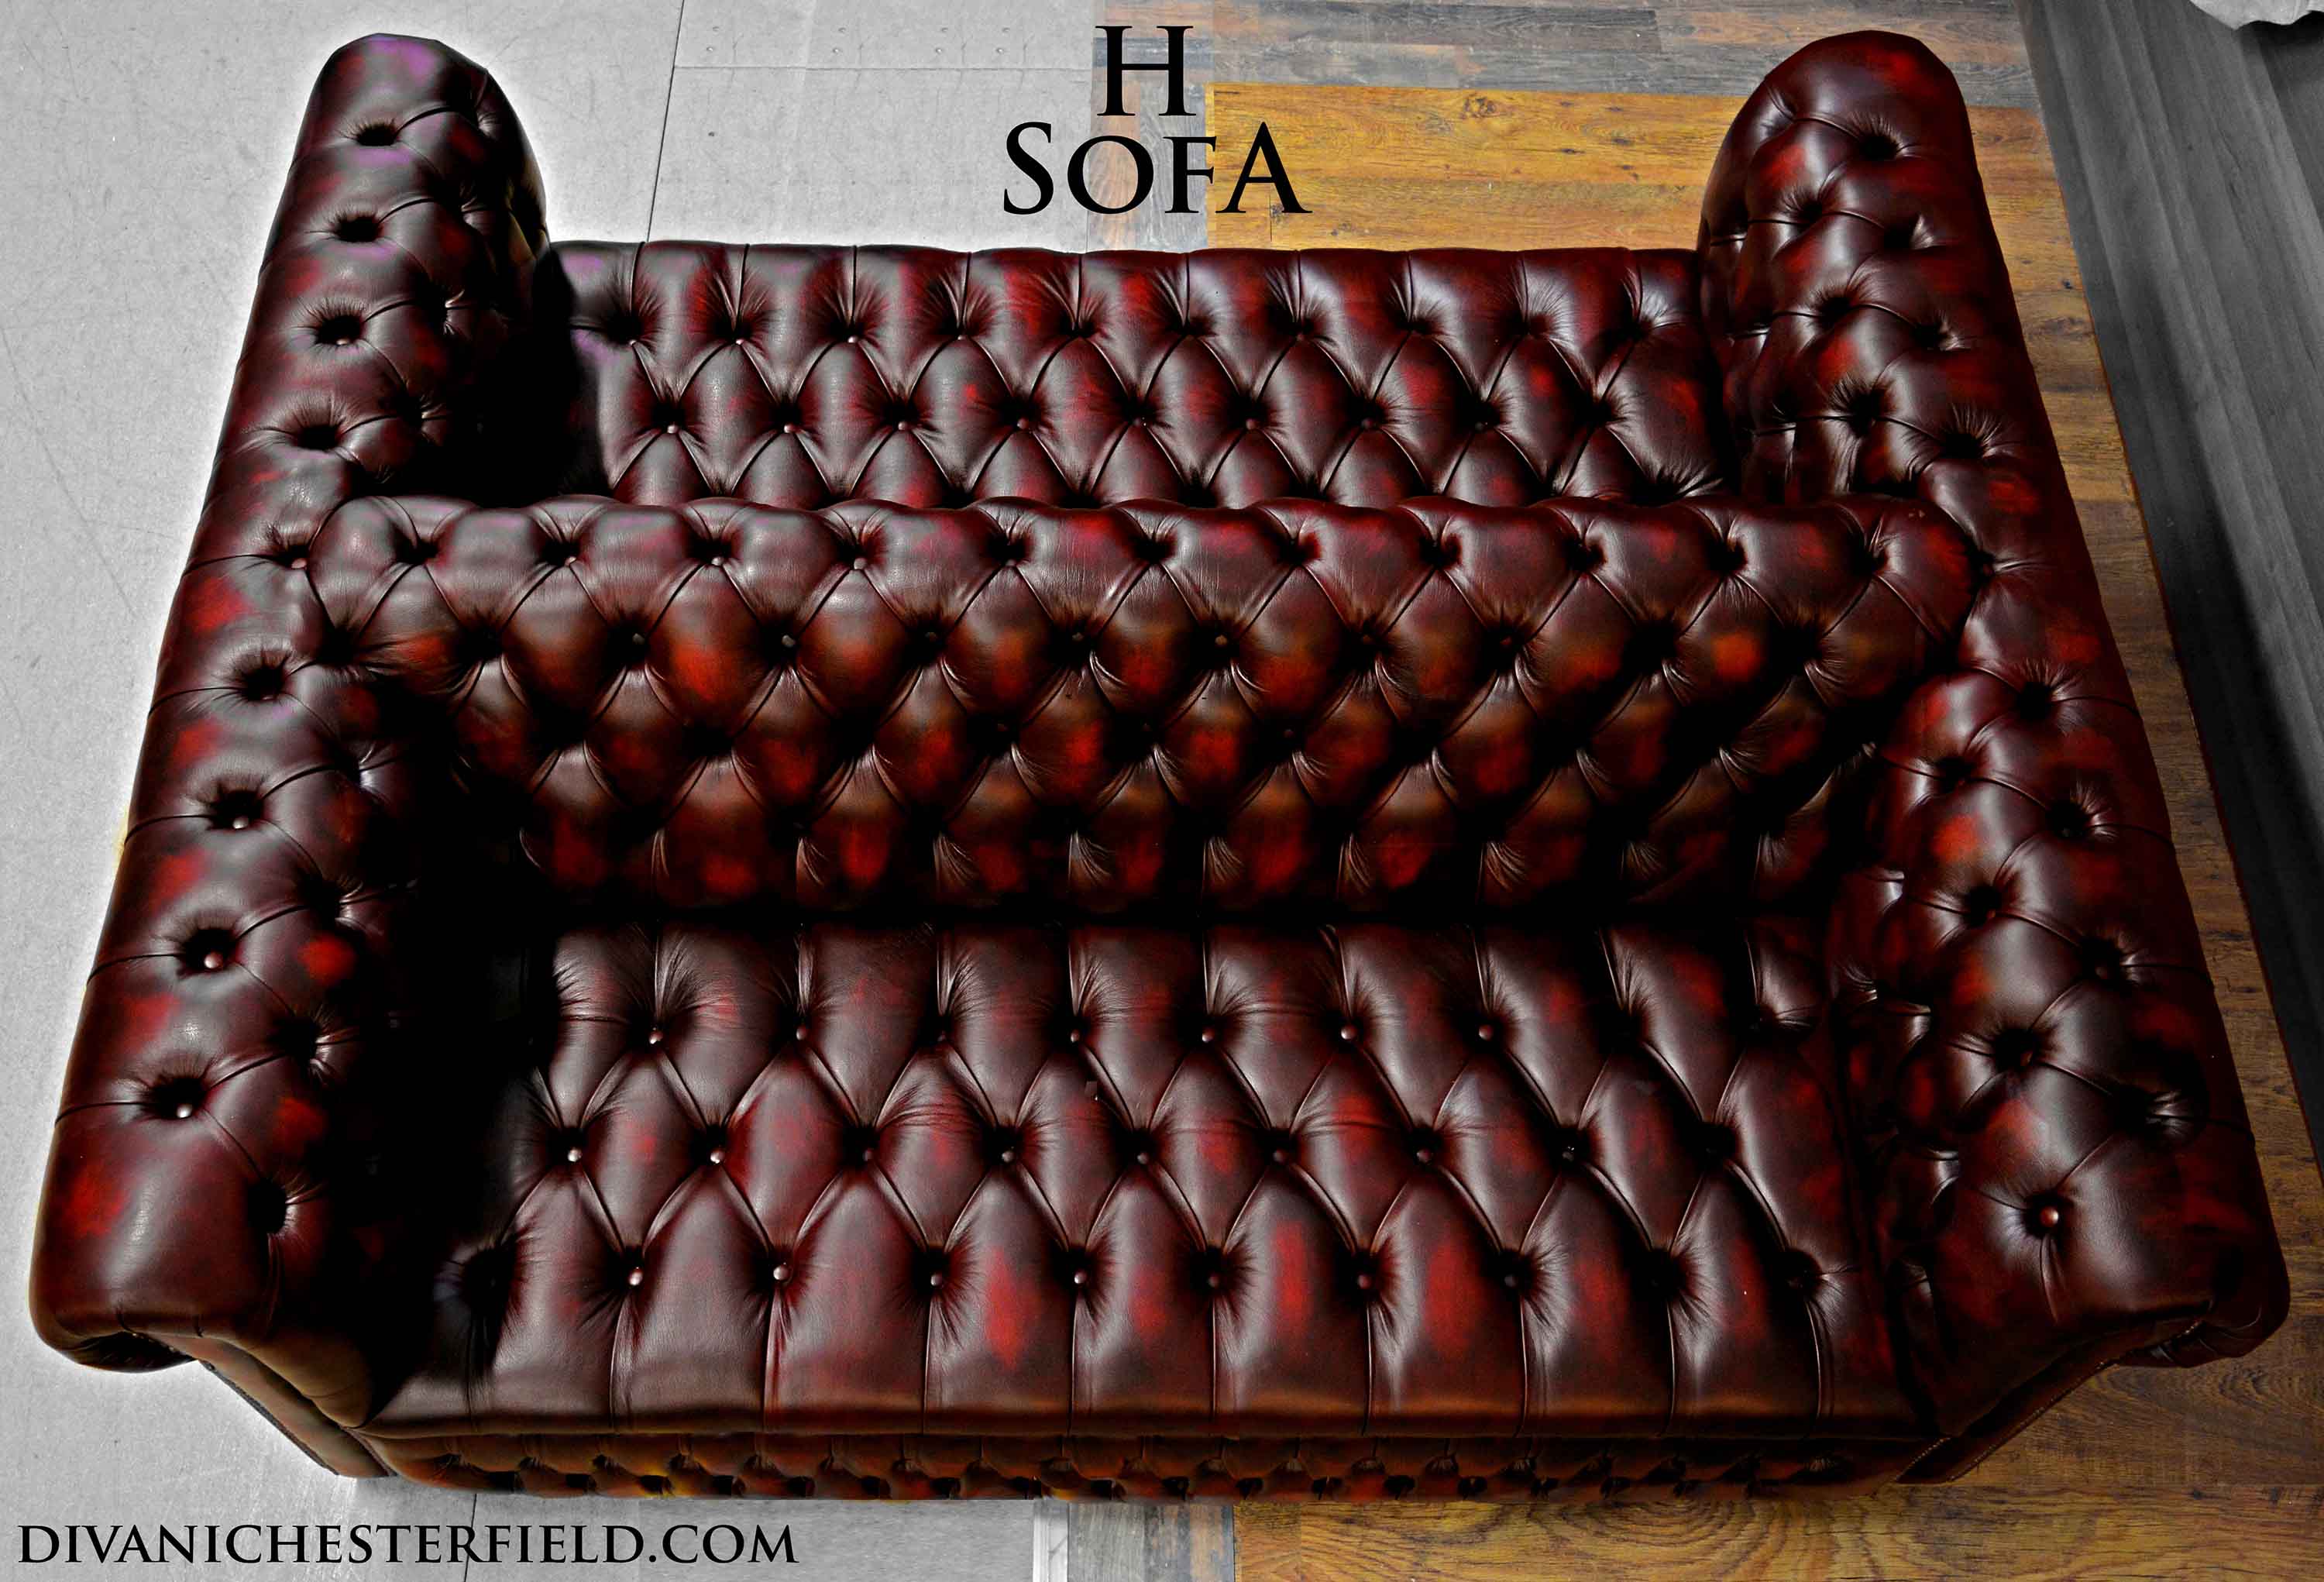 multi coloured leather footstool chesterfield vintage harlequin